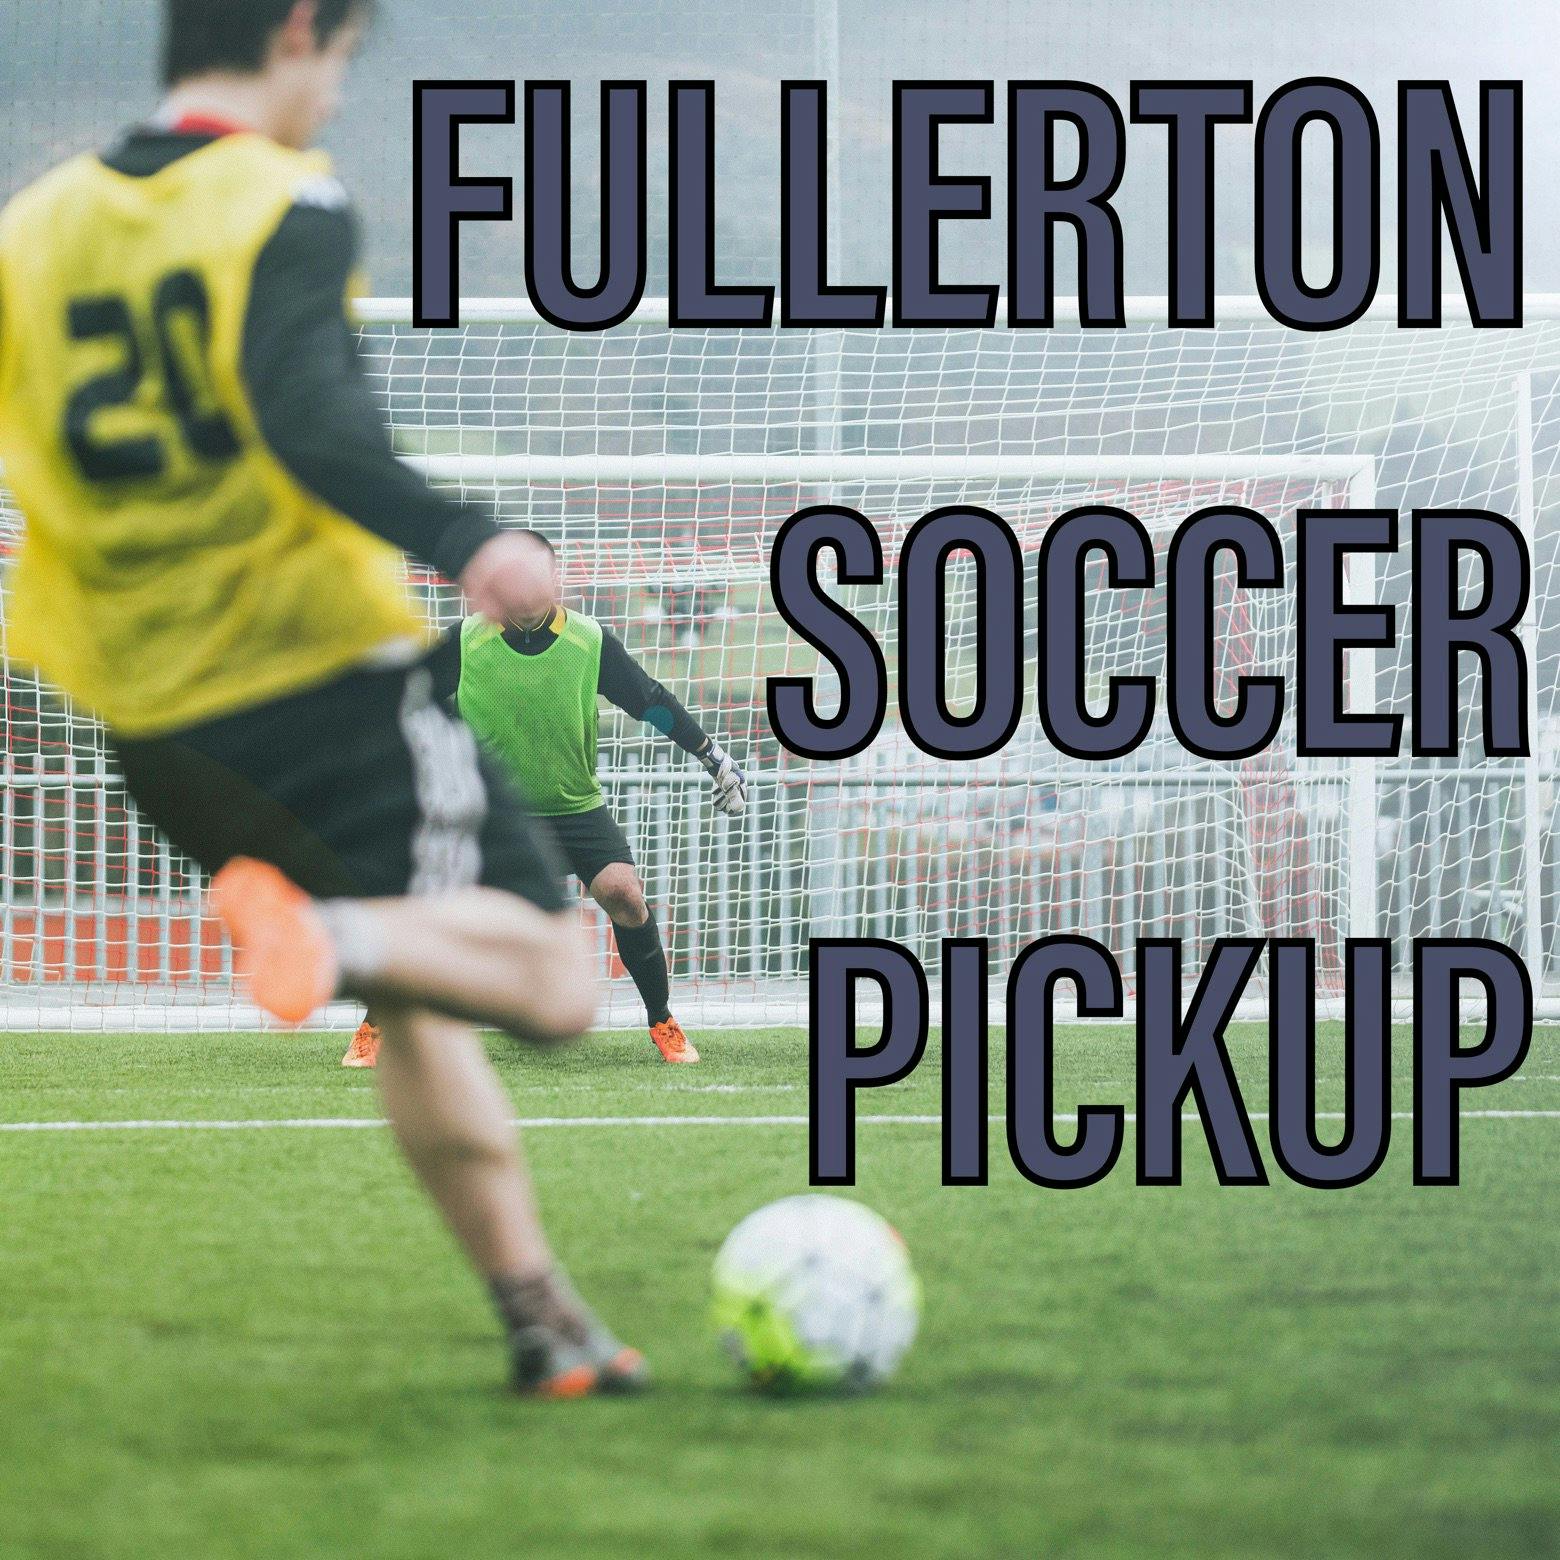 Fullerton Soccer Pickup